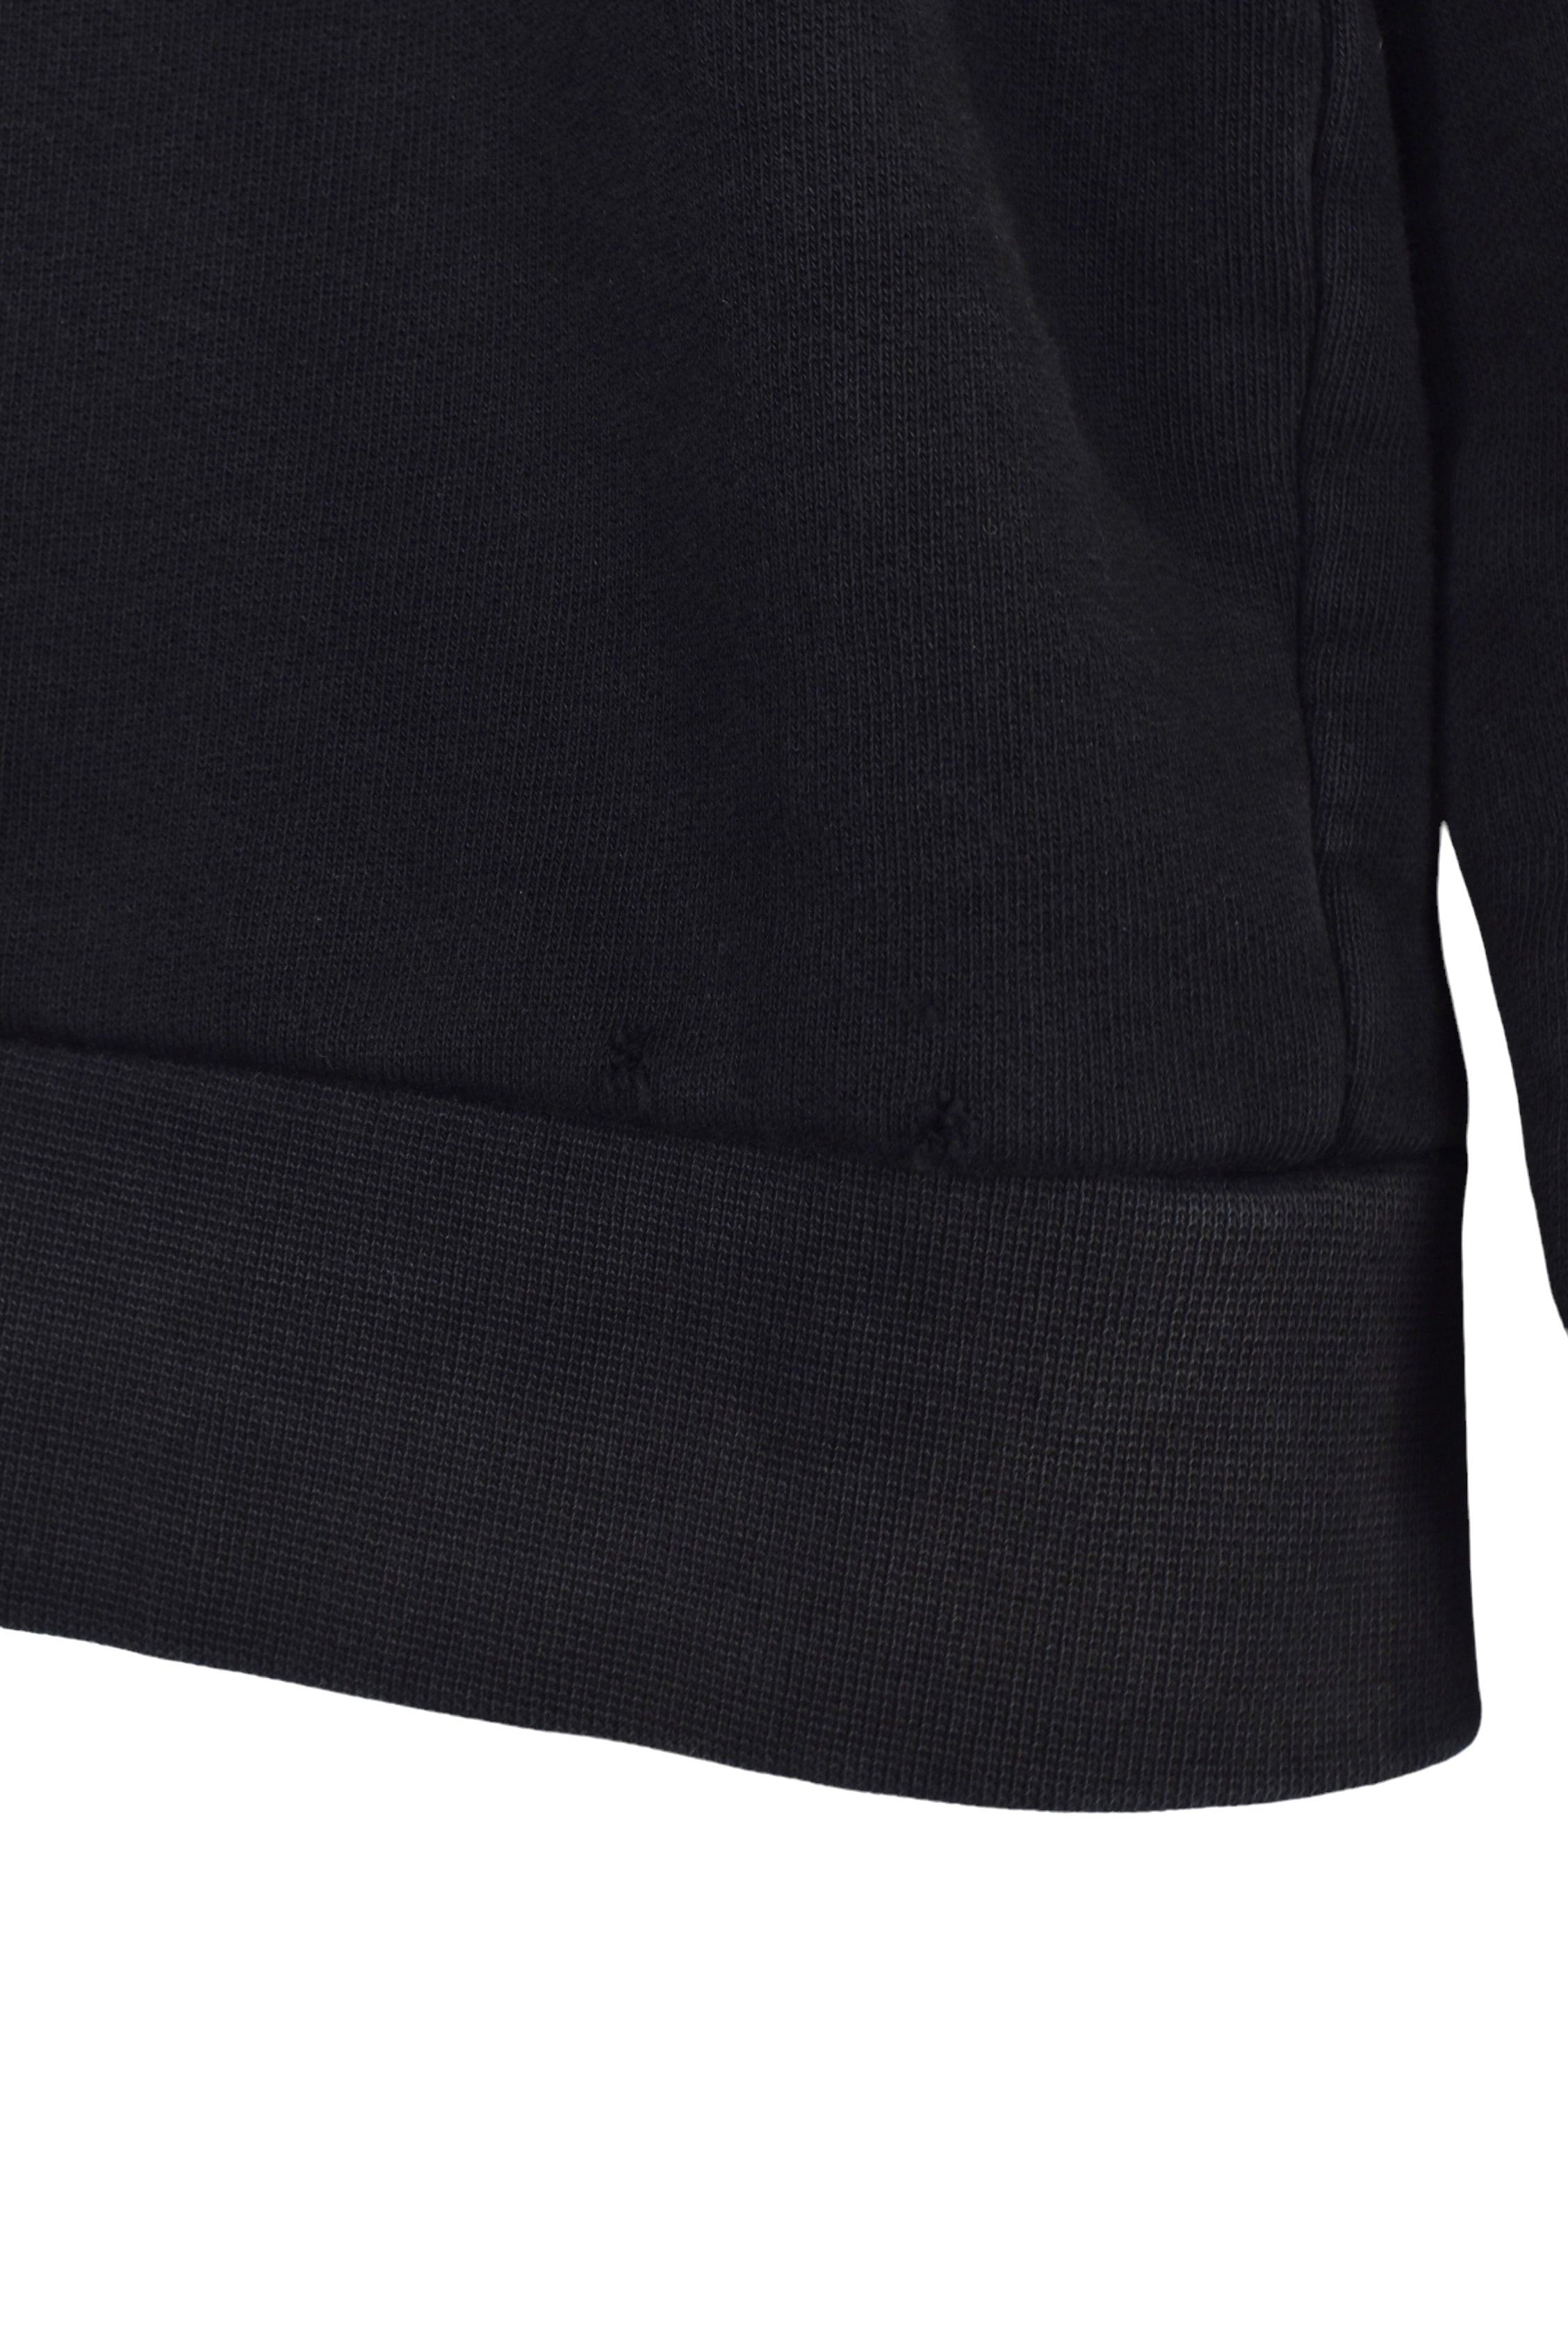 Vintage Lacoste hoodie, black basic sweatshirt - Medium